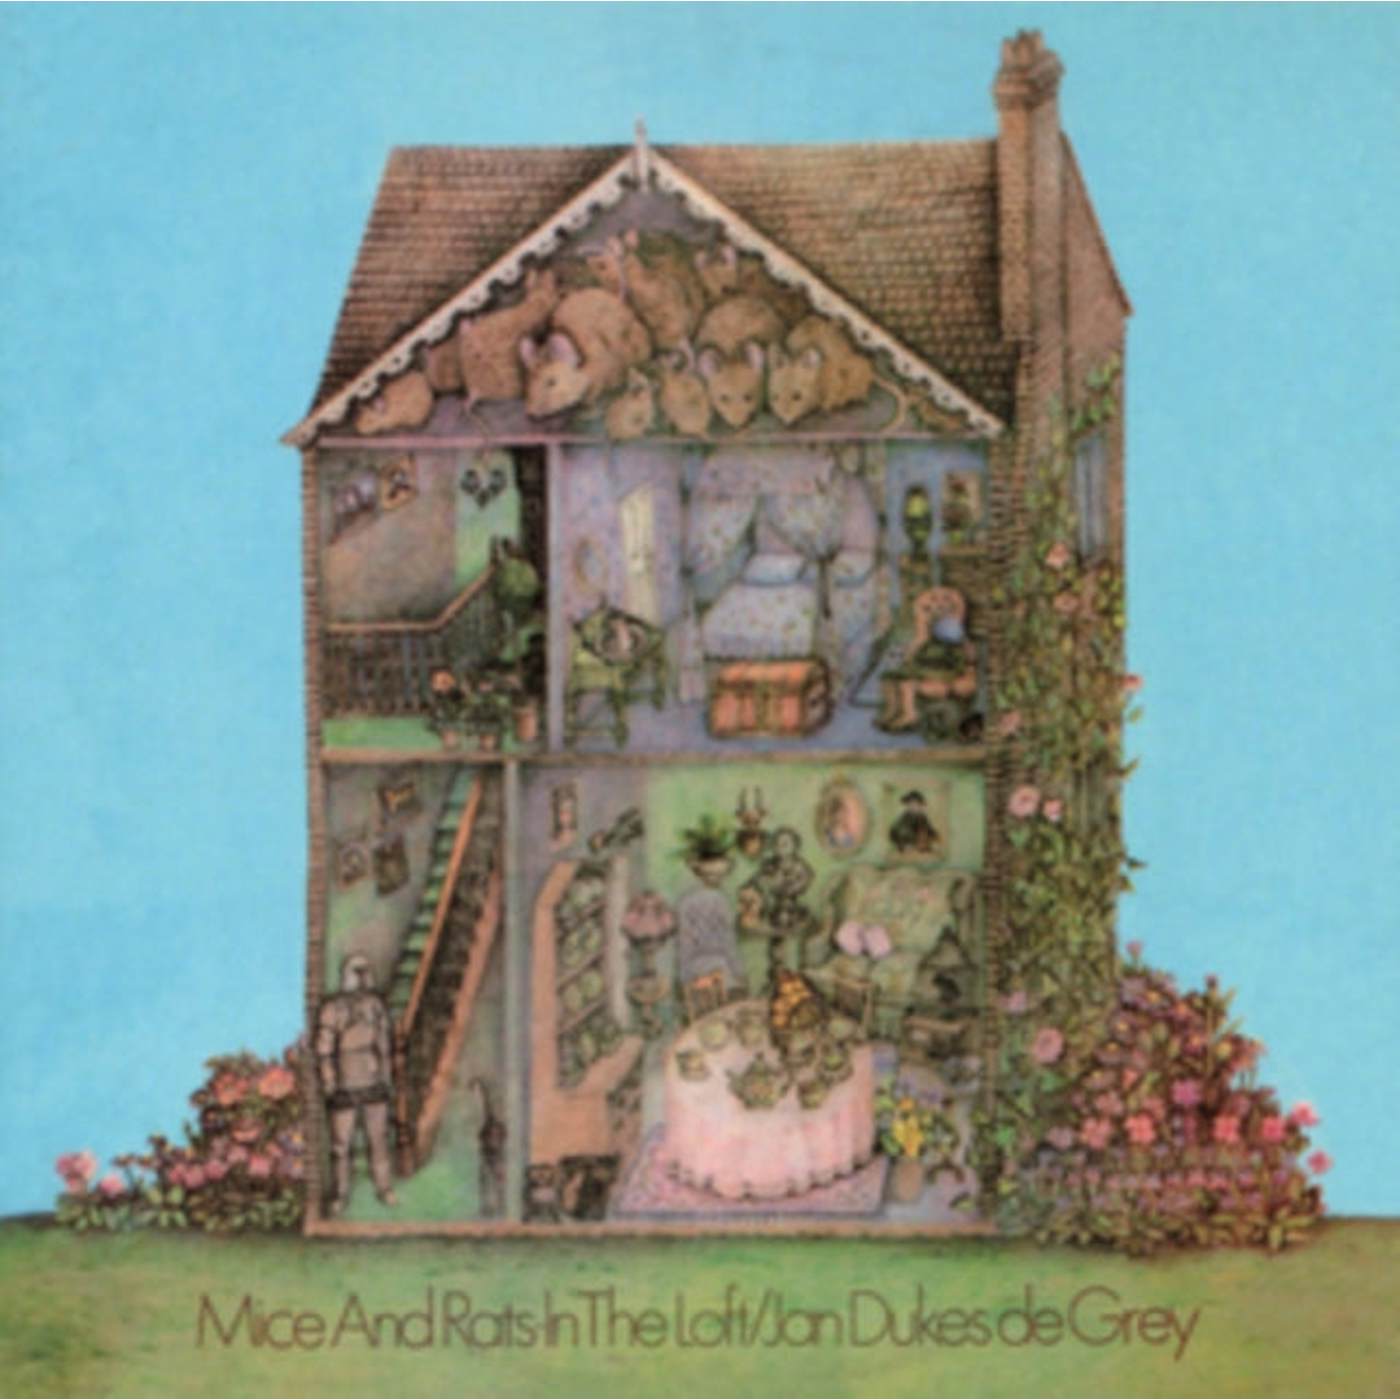 Jan Dukes De Grey LP - Mice And Rats In The Loft (Vinyl)